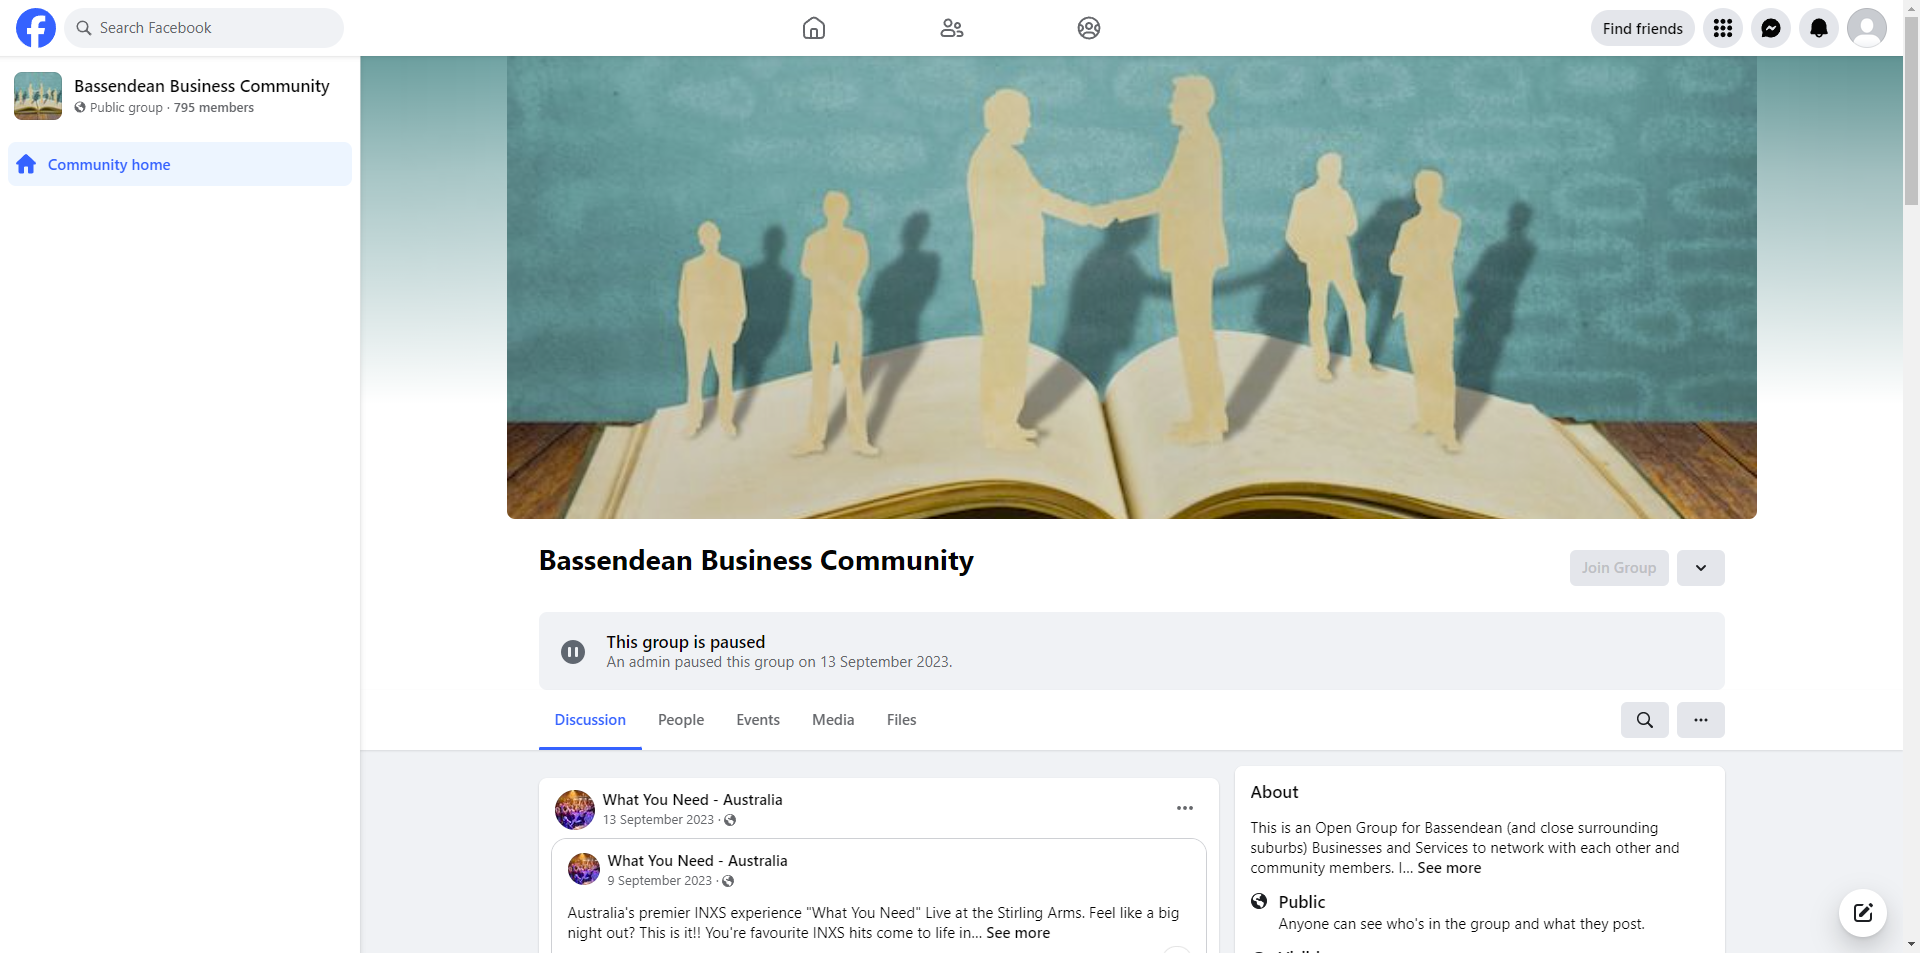 Bassendean Business Community